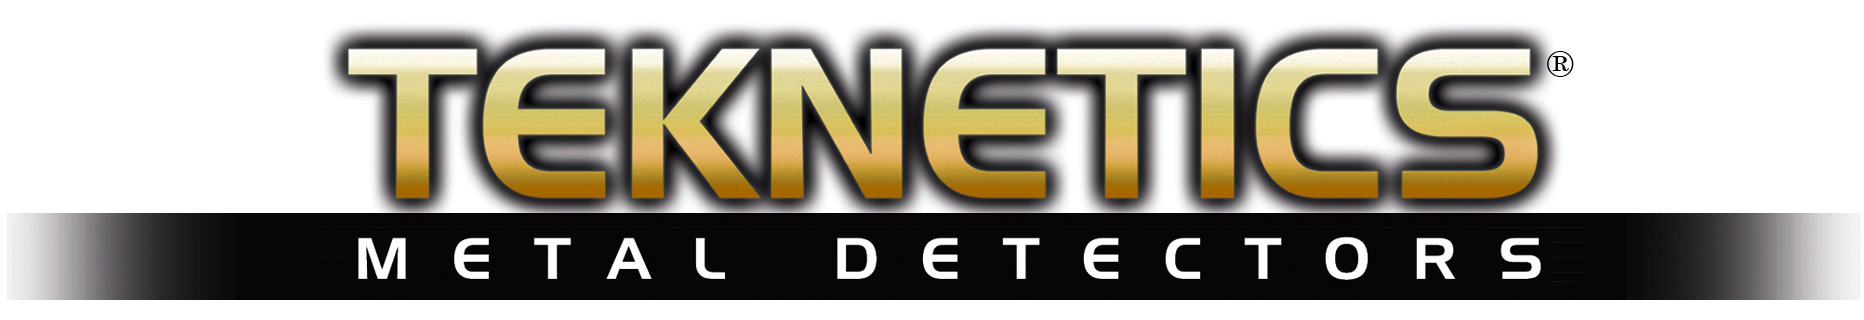 Logo Detector de Metais Teknetics Eurotek PRO